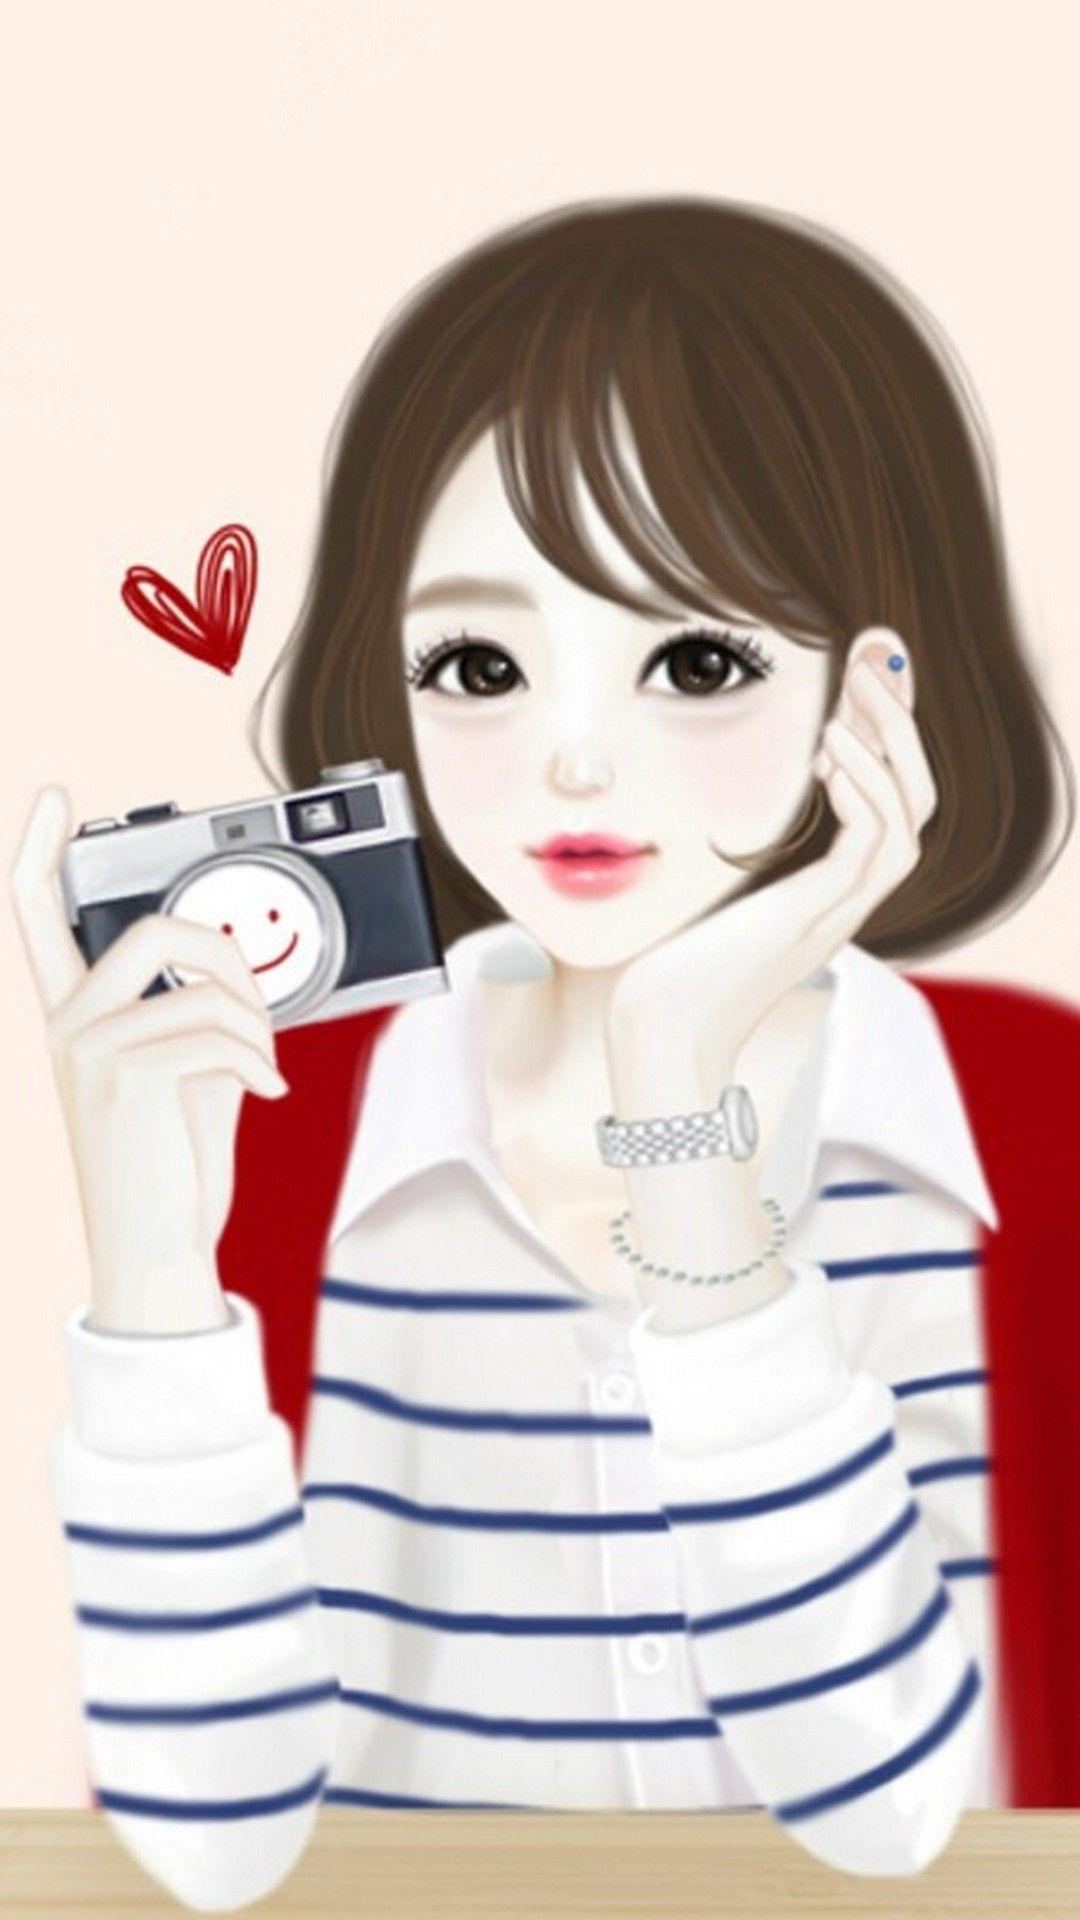 Cute Drawings Wallpaper For Phone HD. Cute girl wallpaper, Anime